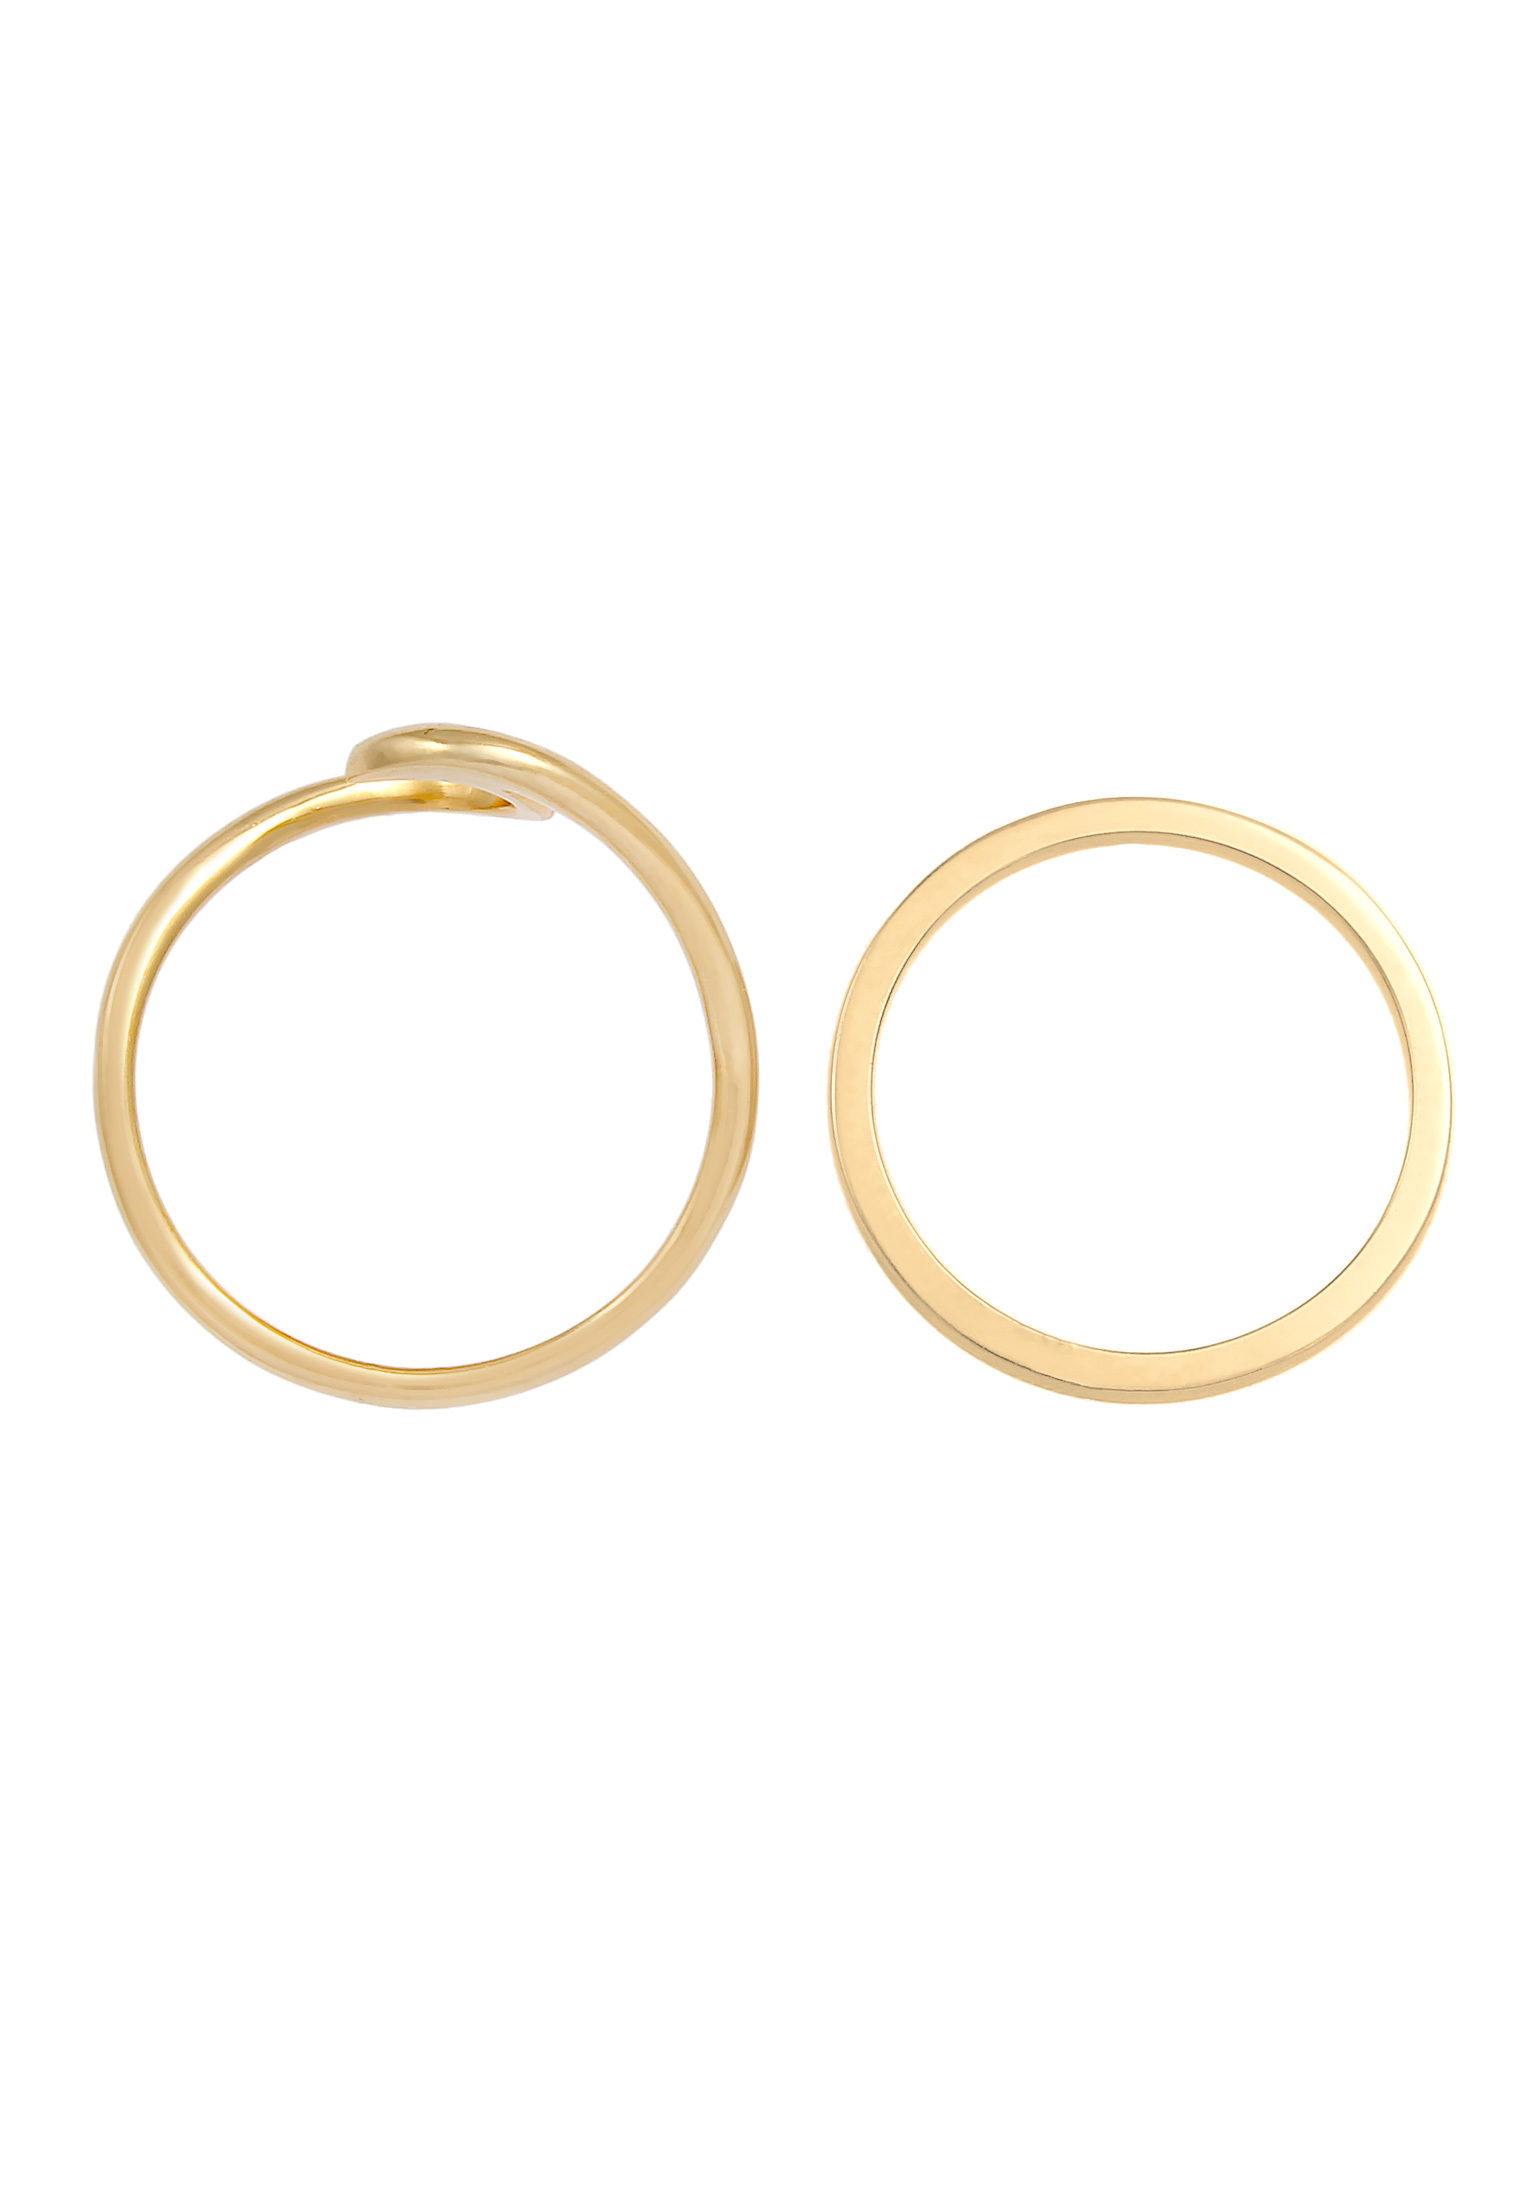 ELLI Ring Bandring, Wellen in Gold 